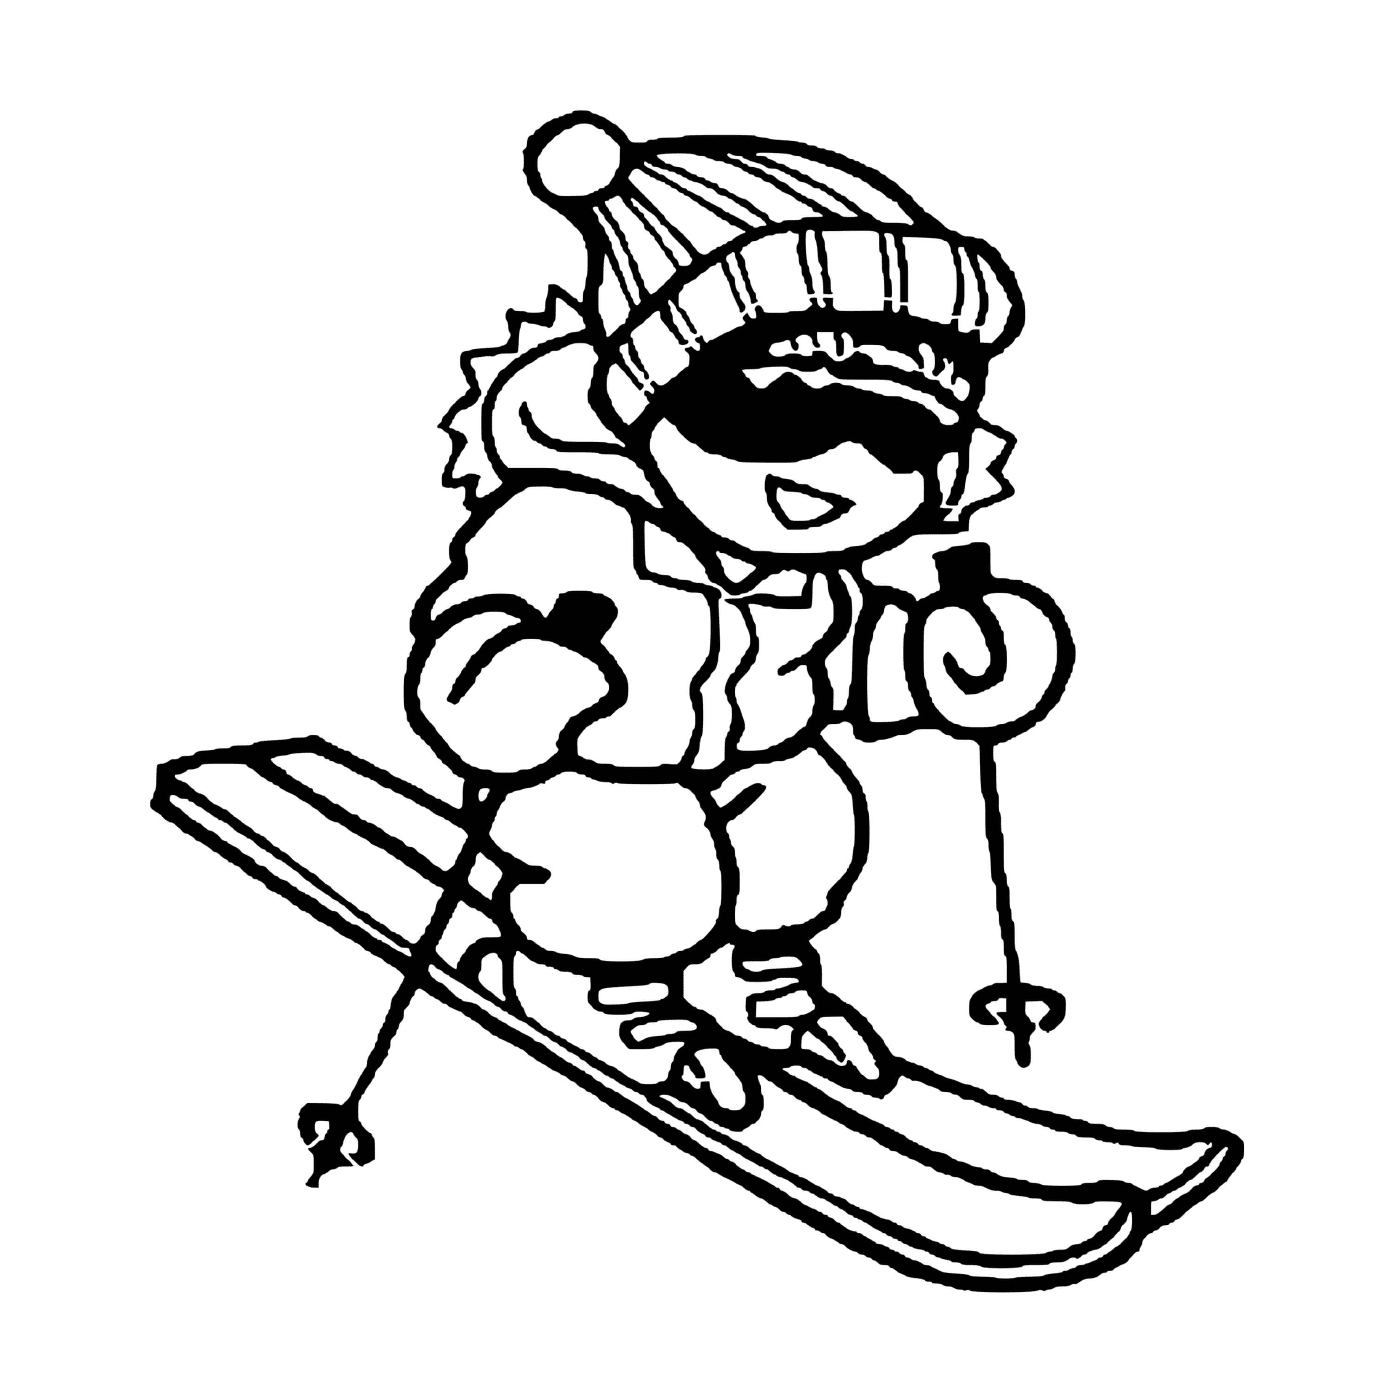   Enfant skie montagne vitesse 